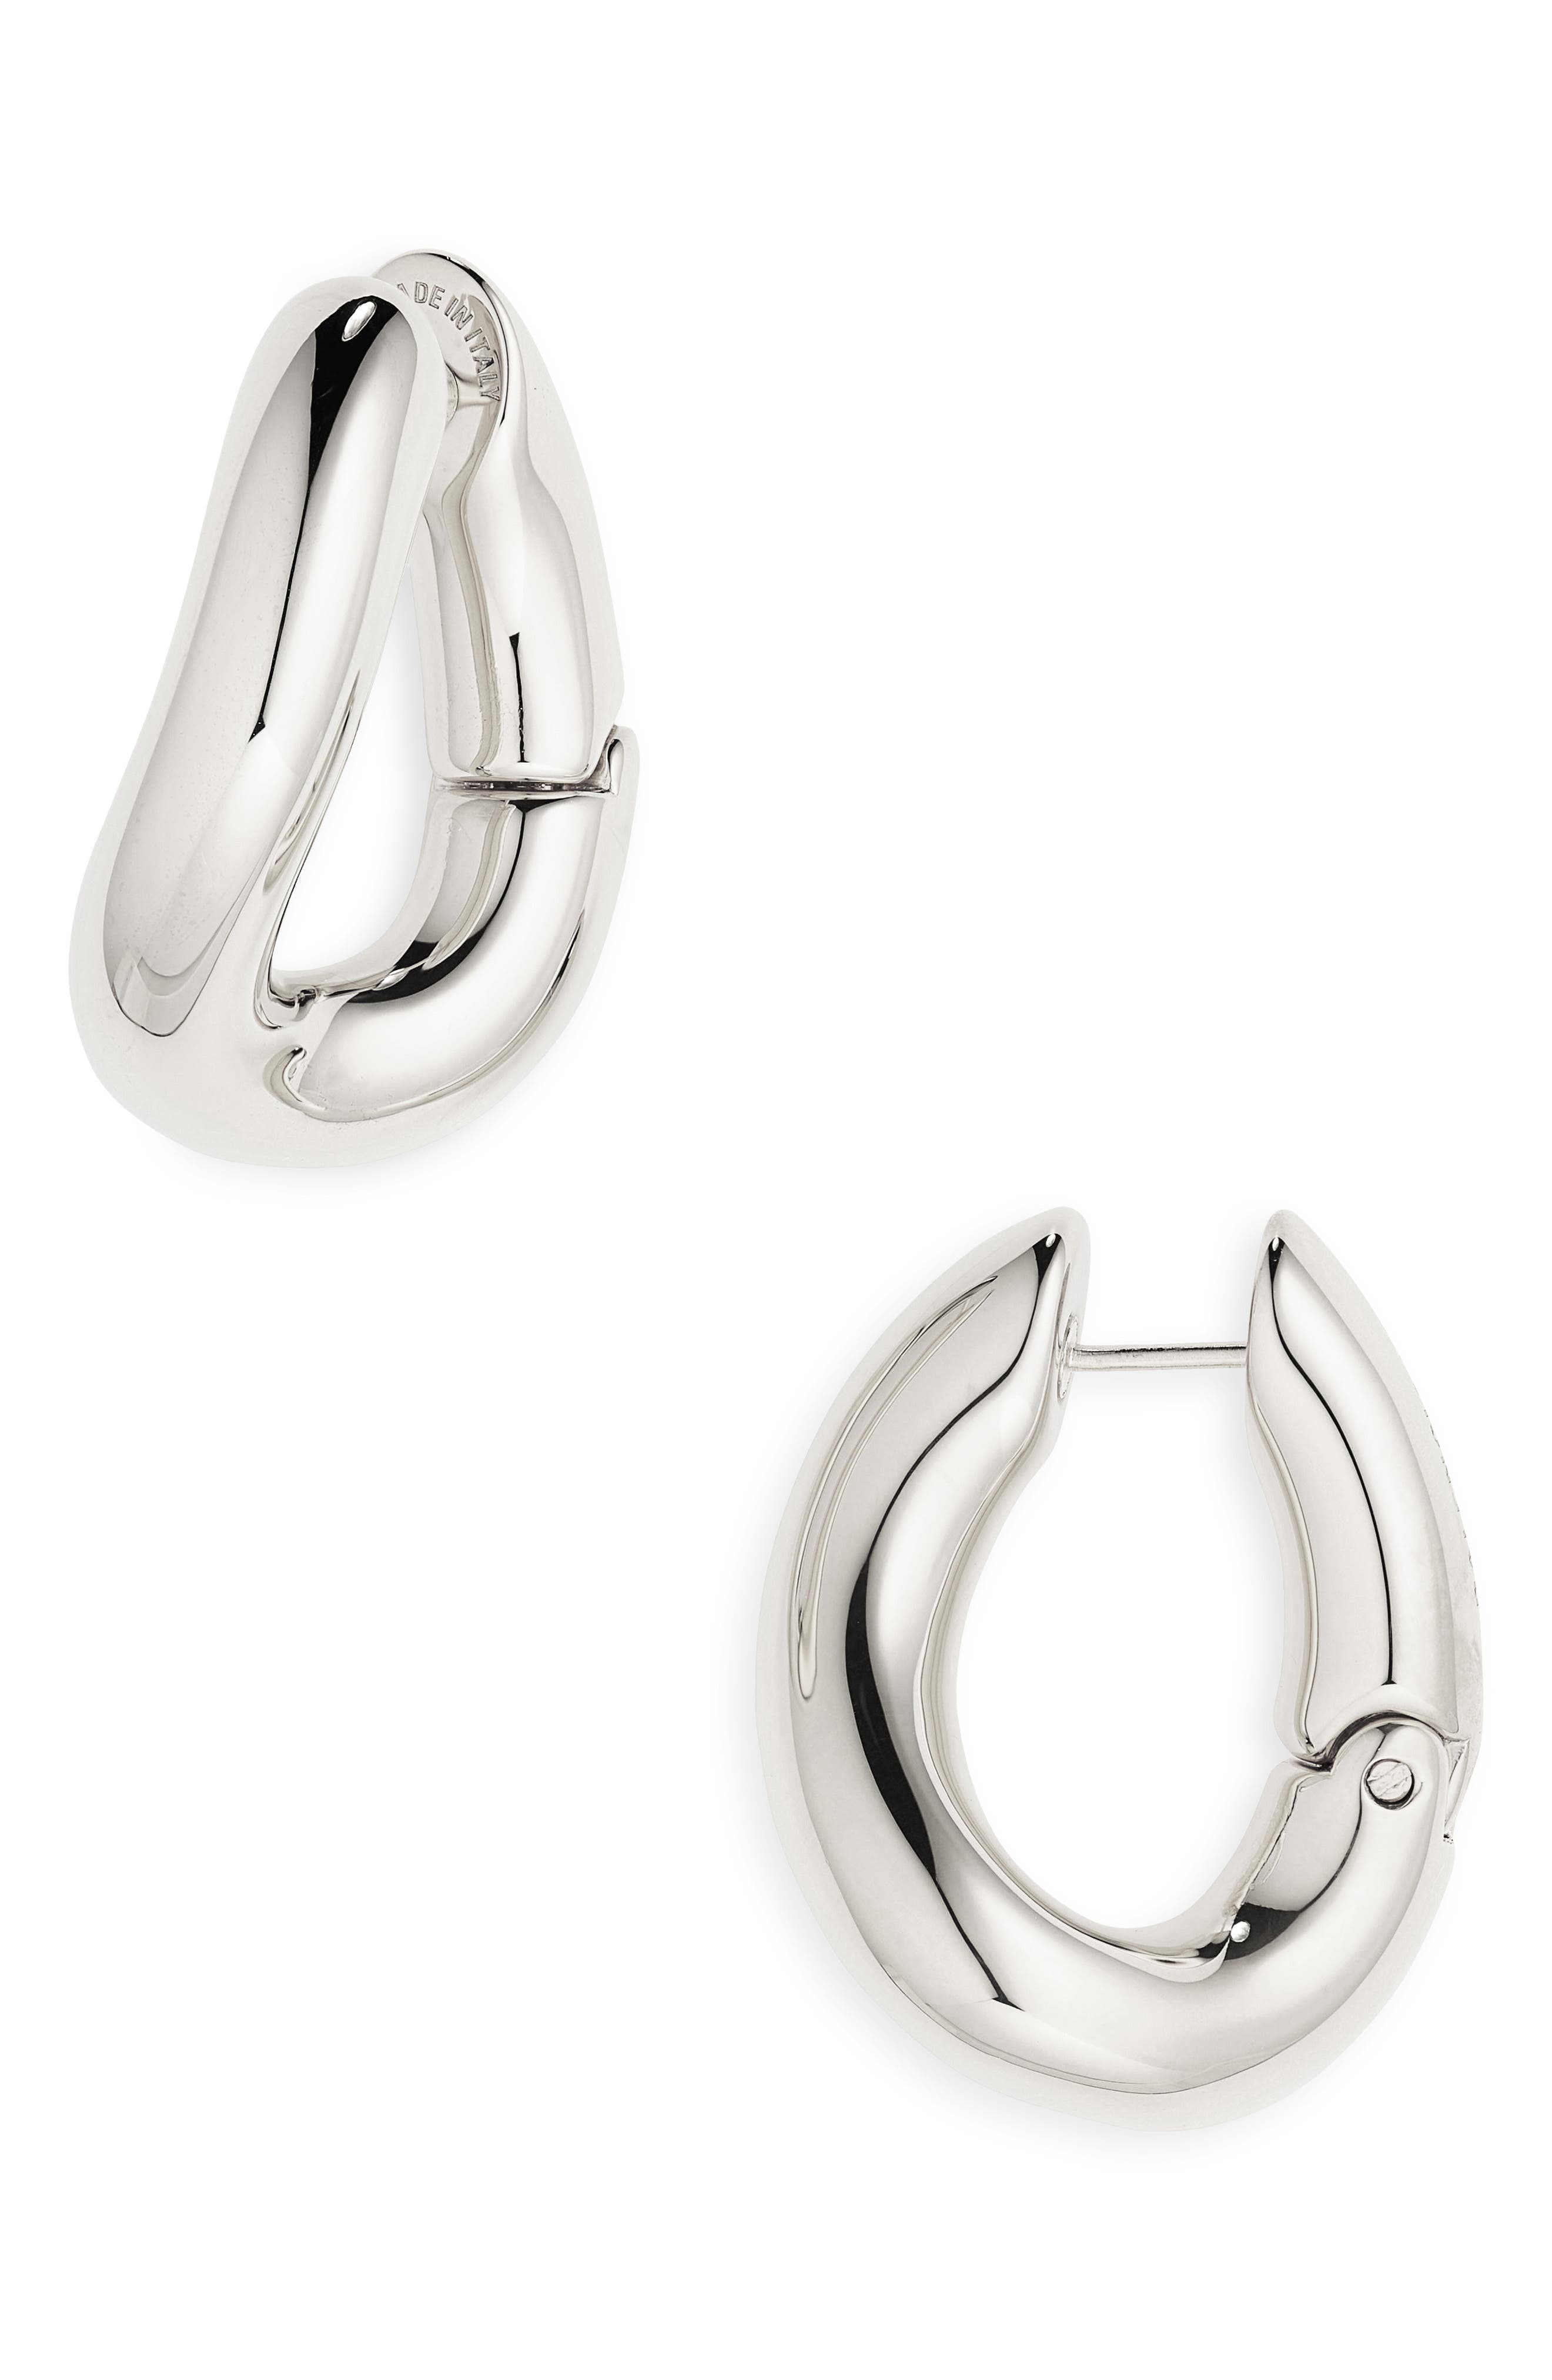 Balenciaga Hoop Earrings in Shiny Silver at Nordstrom